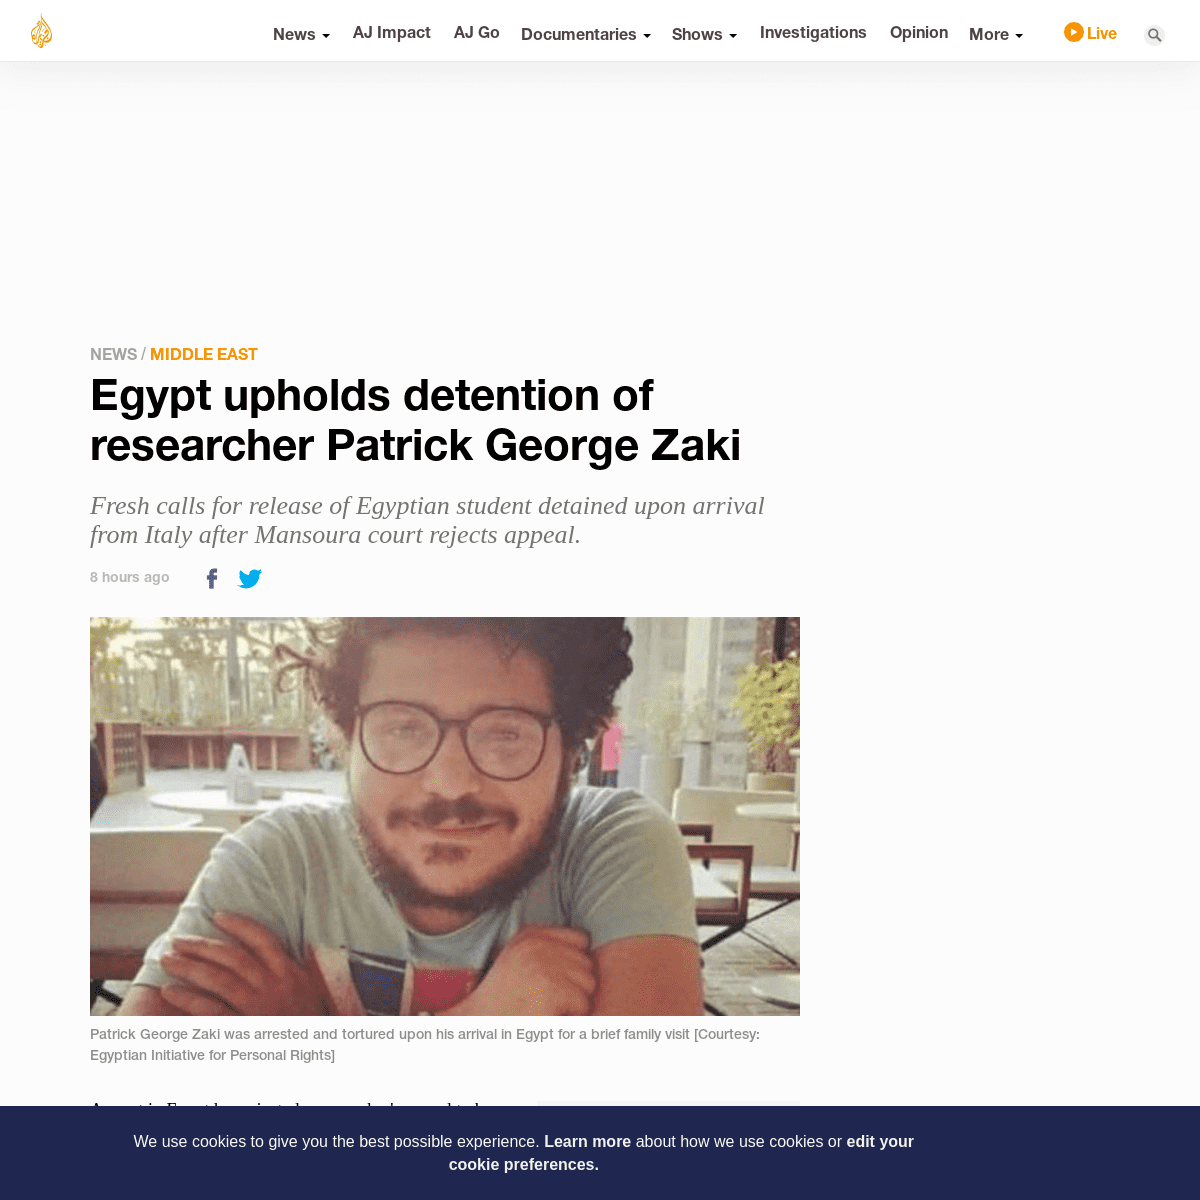 A complete backup of www.aljazeera.com/news/2020/02/egypt-upholds-detention-researcher-patrick-george-zaki-200215165208767.html